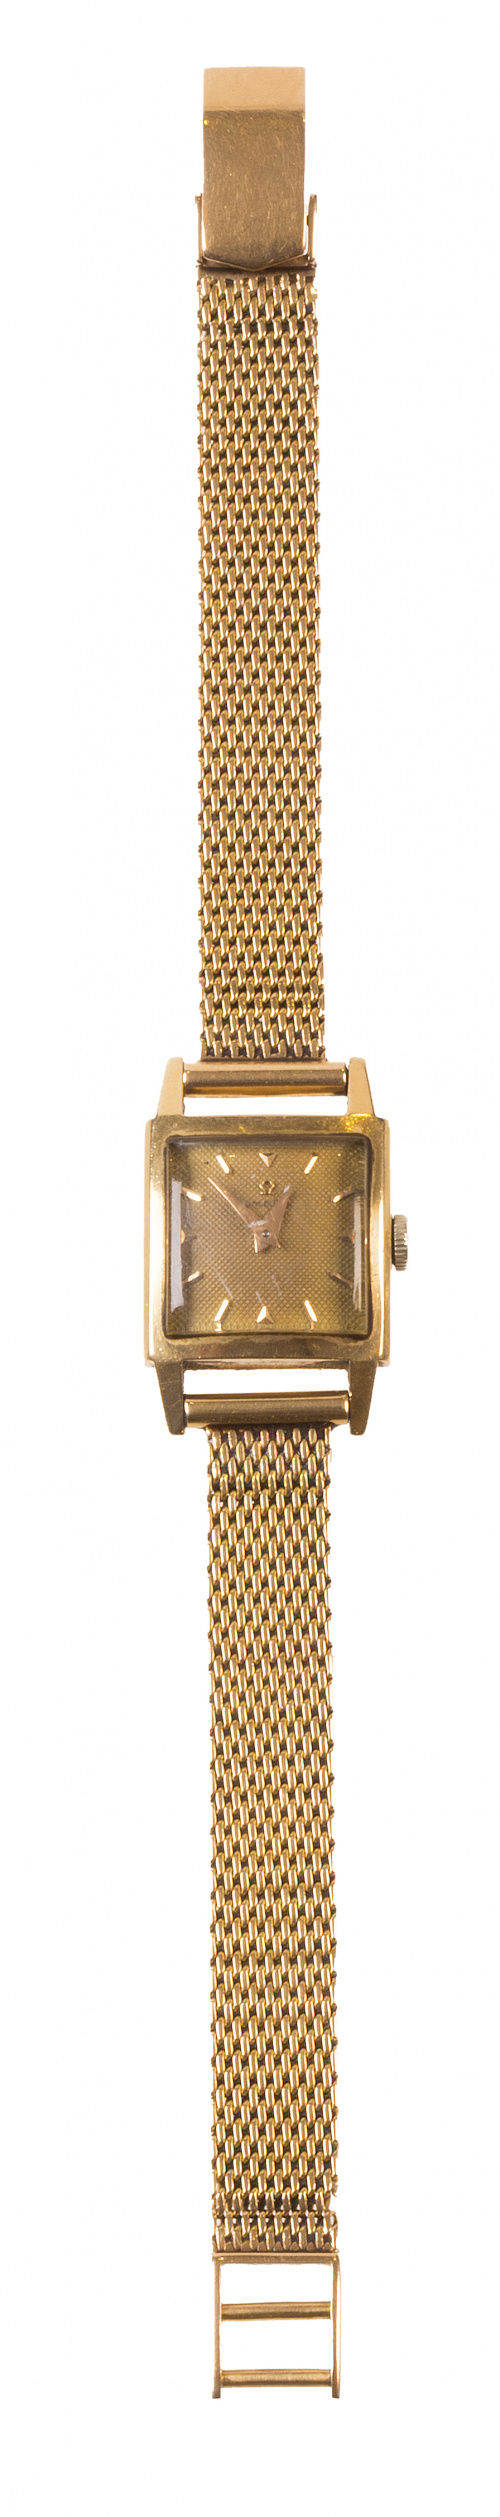 Reloj de pulsera para sra OMEGA en oro amarillo de 18K